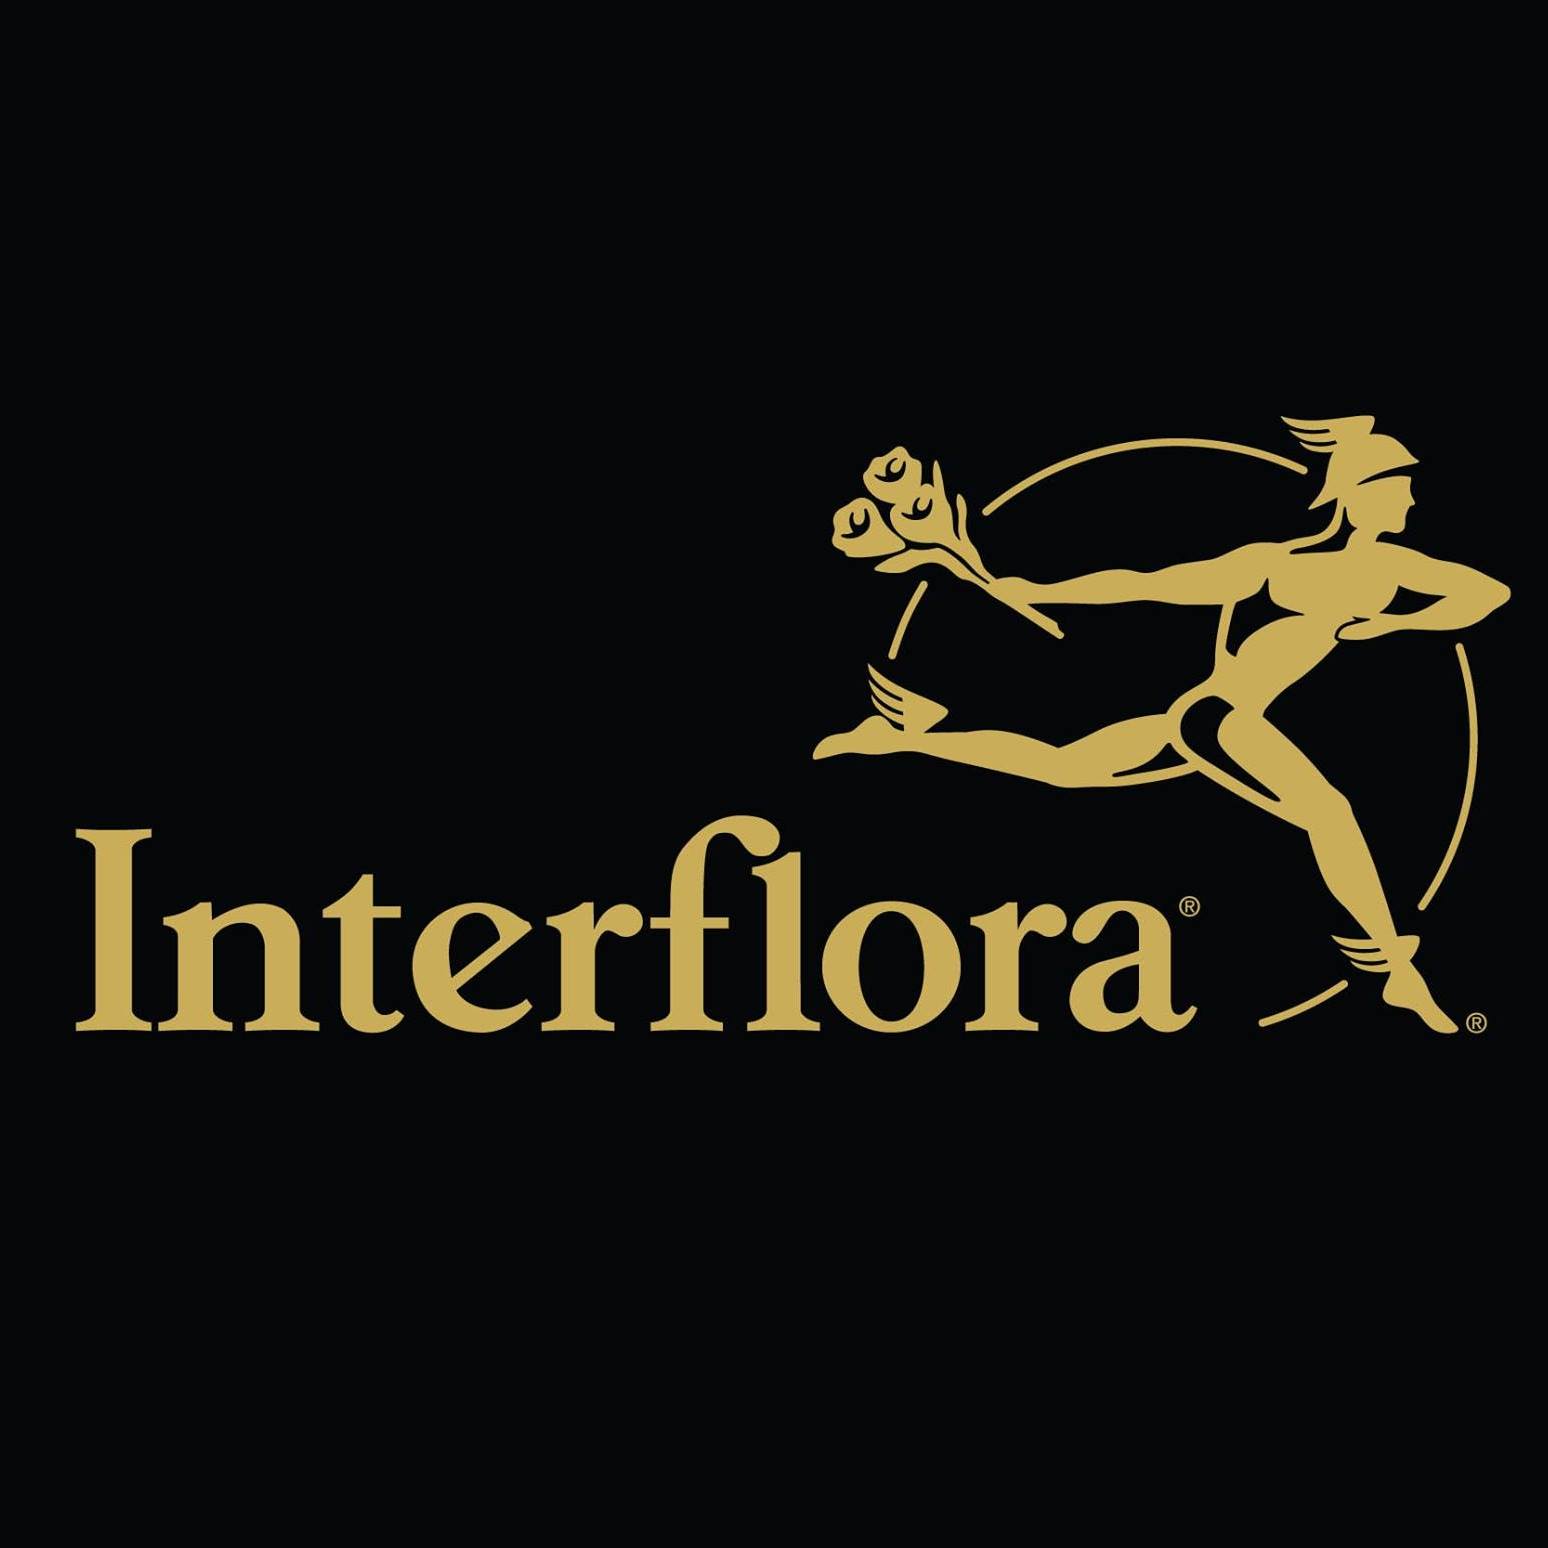 Fleurop-Interflora